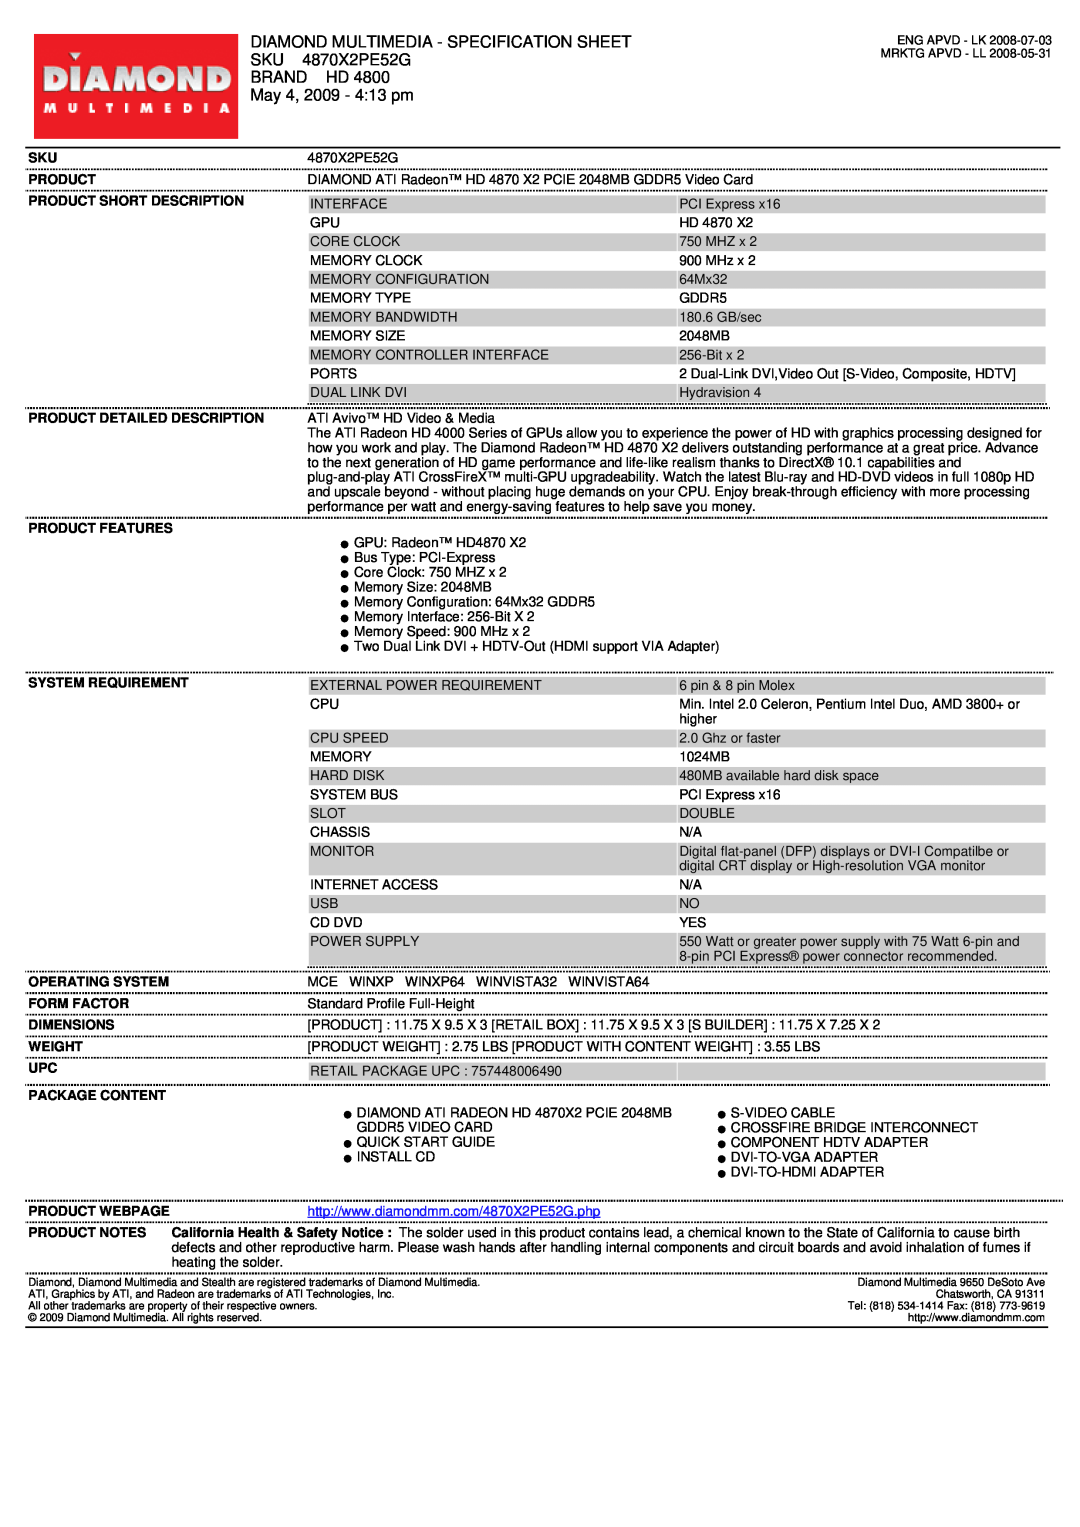 Diamond Multimedia 4870X2PE52G specifications Diamond Multimedia - Specification Sheet, Brand Hd, May 4, 2009 - 413 pm 